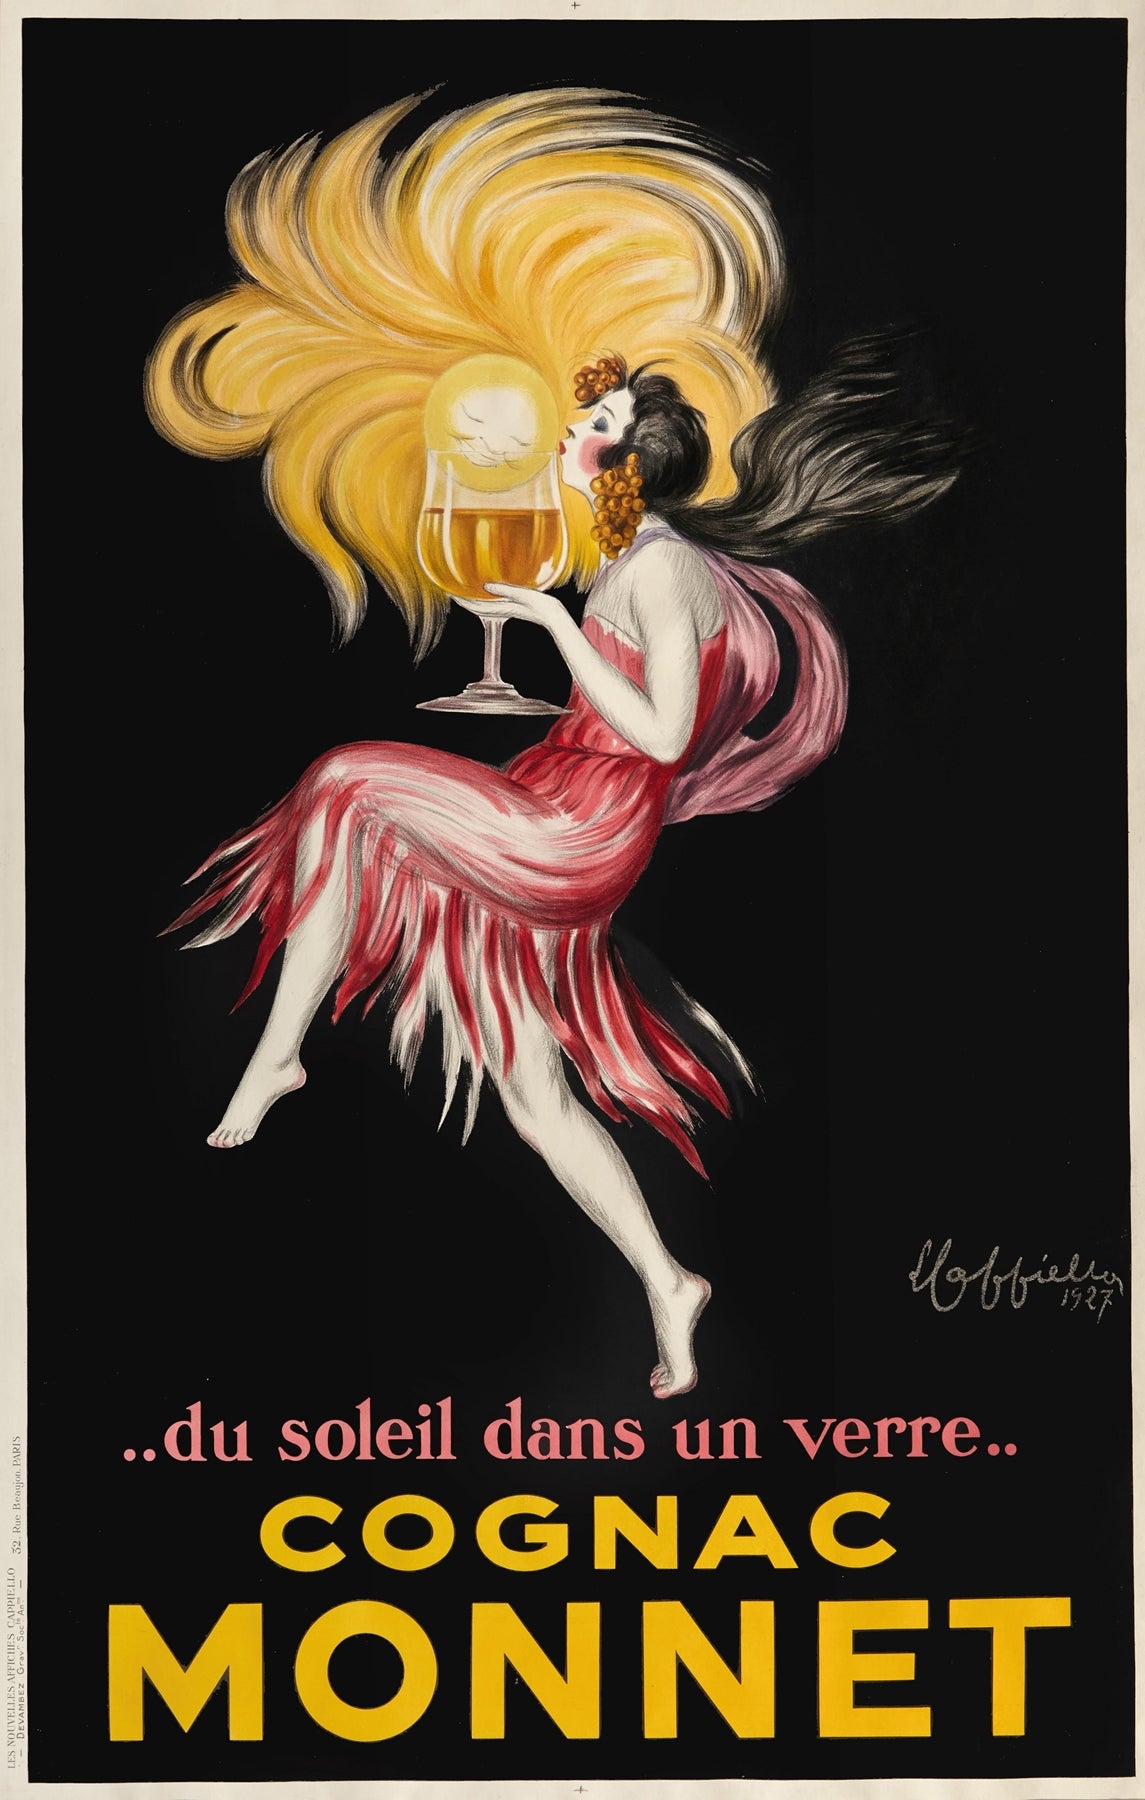 Cognac Monnet poster (1900s) | Man cave posters | Leonetto Cappiello Posters, Prints, & Visual Artwork The Trumpet Shop   